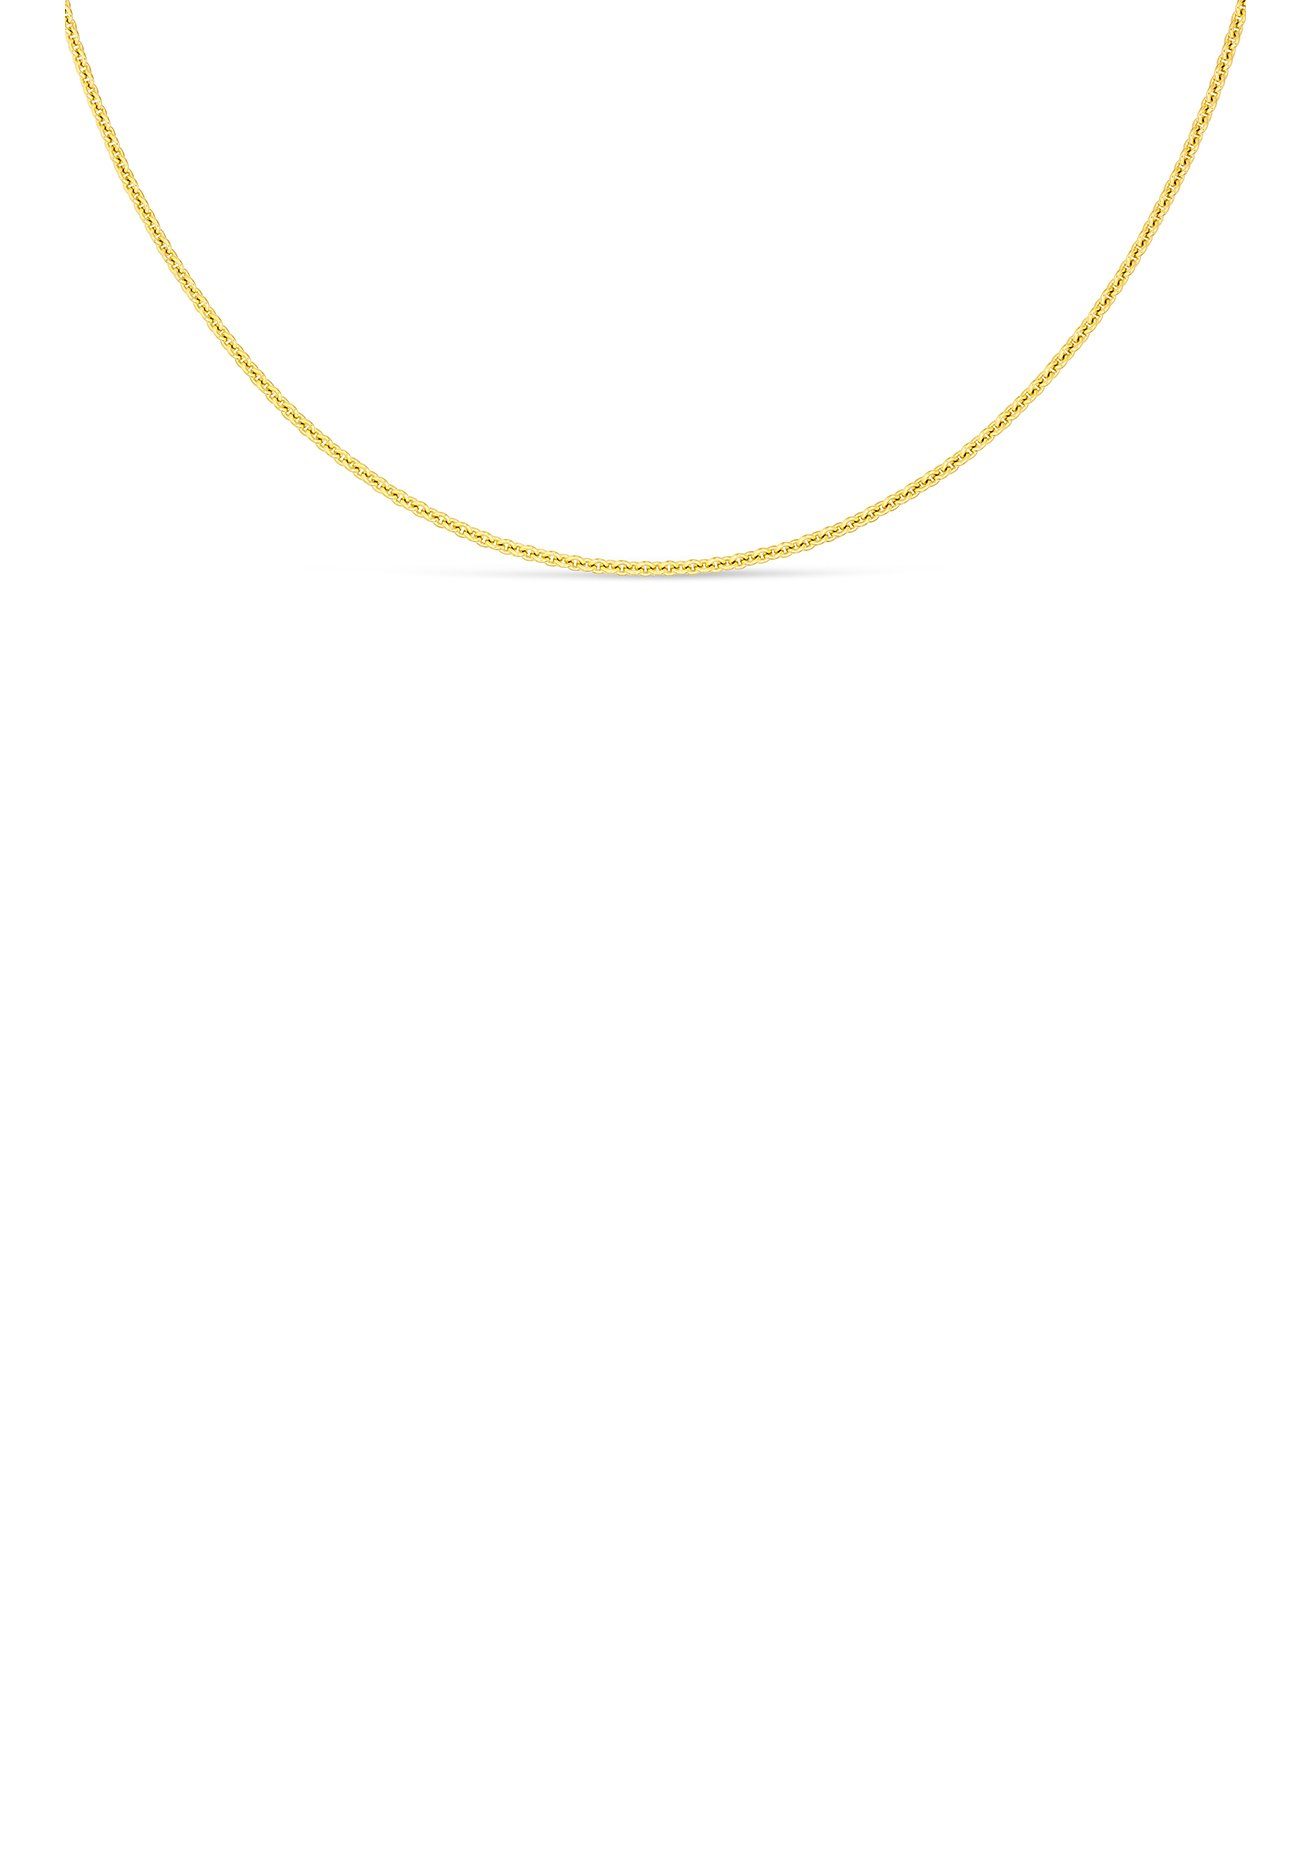 Firetti Collierkettchen Schmuck Geschenk Gold 333 Halsschmuck Halskette Goldkette Ankerkette, zu Kleid, Shirt, Jeans, Sneaker! Anlass Geburtstag Weihnachten | Goldketten